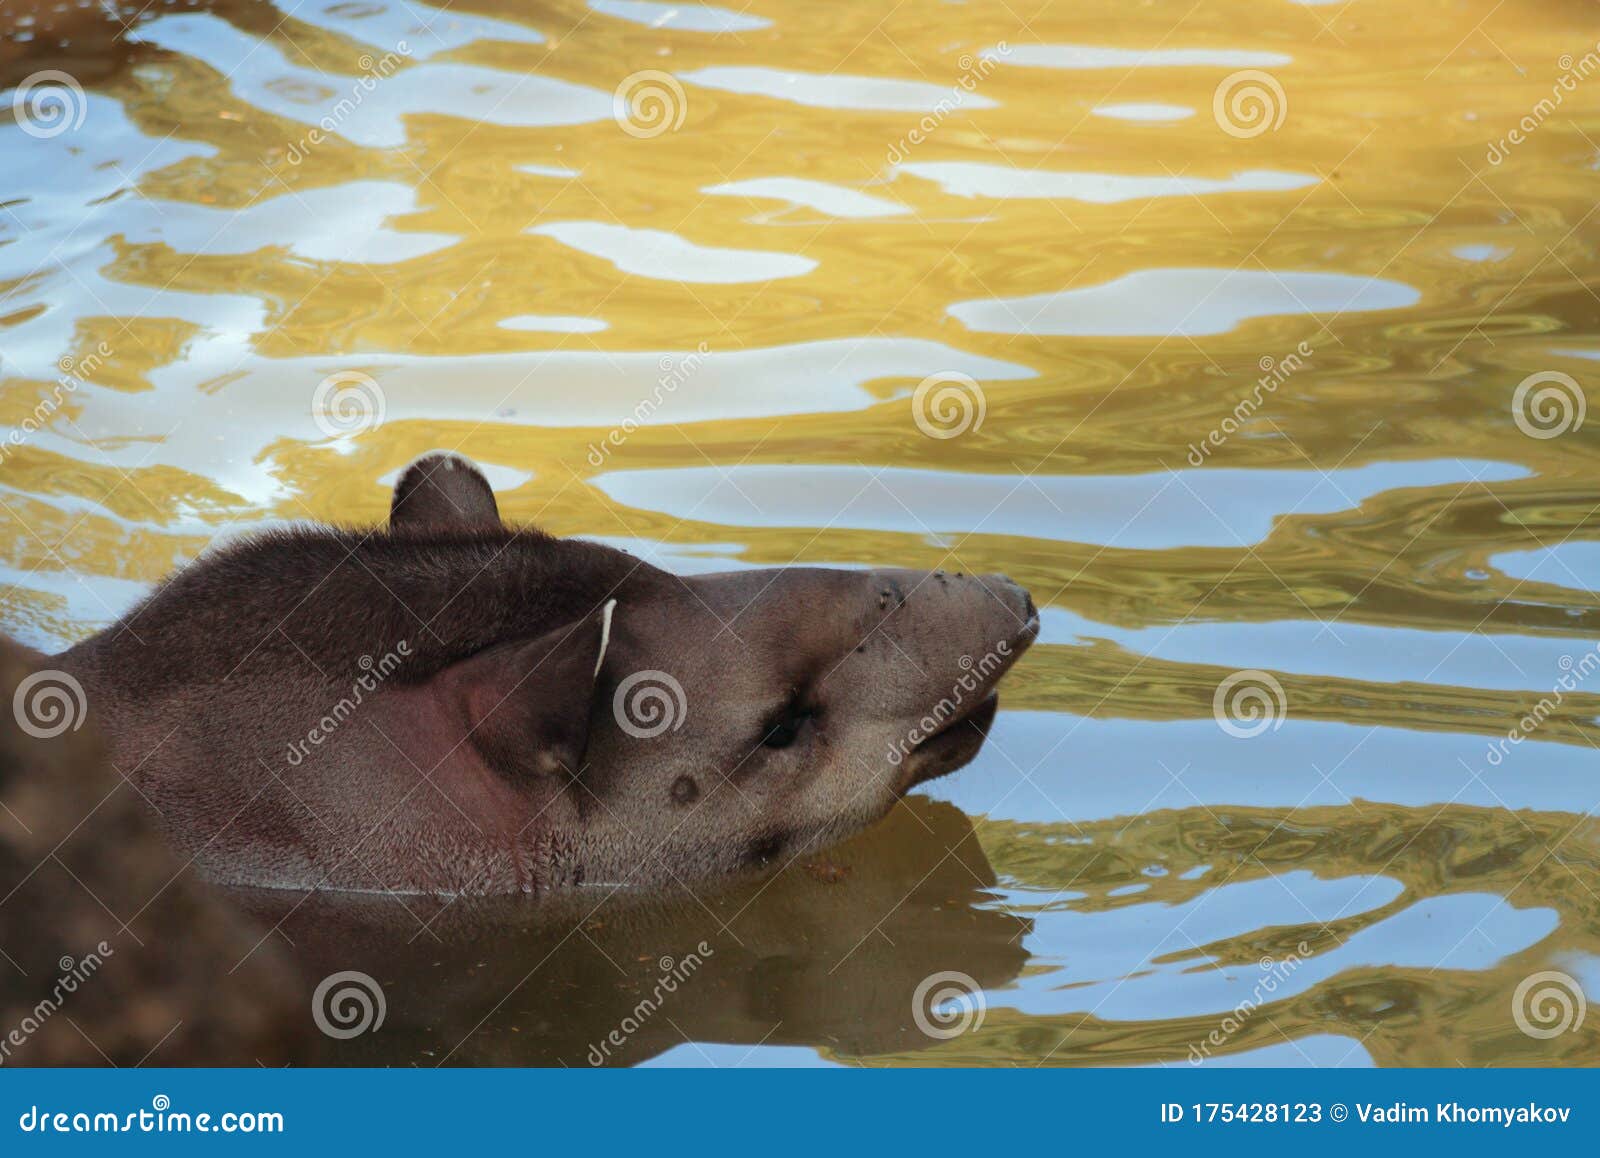 head of south american tapir. rome, italy